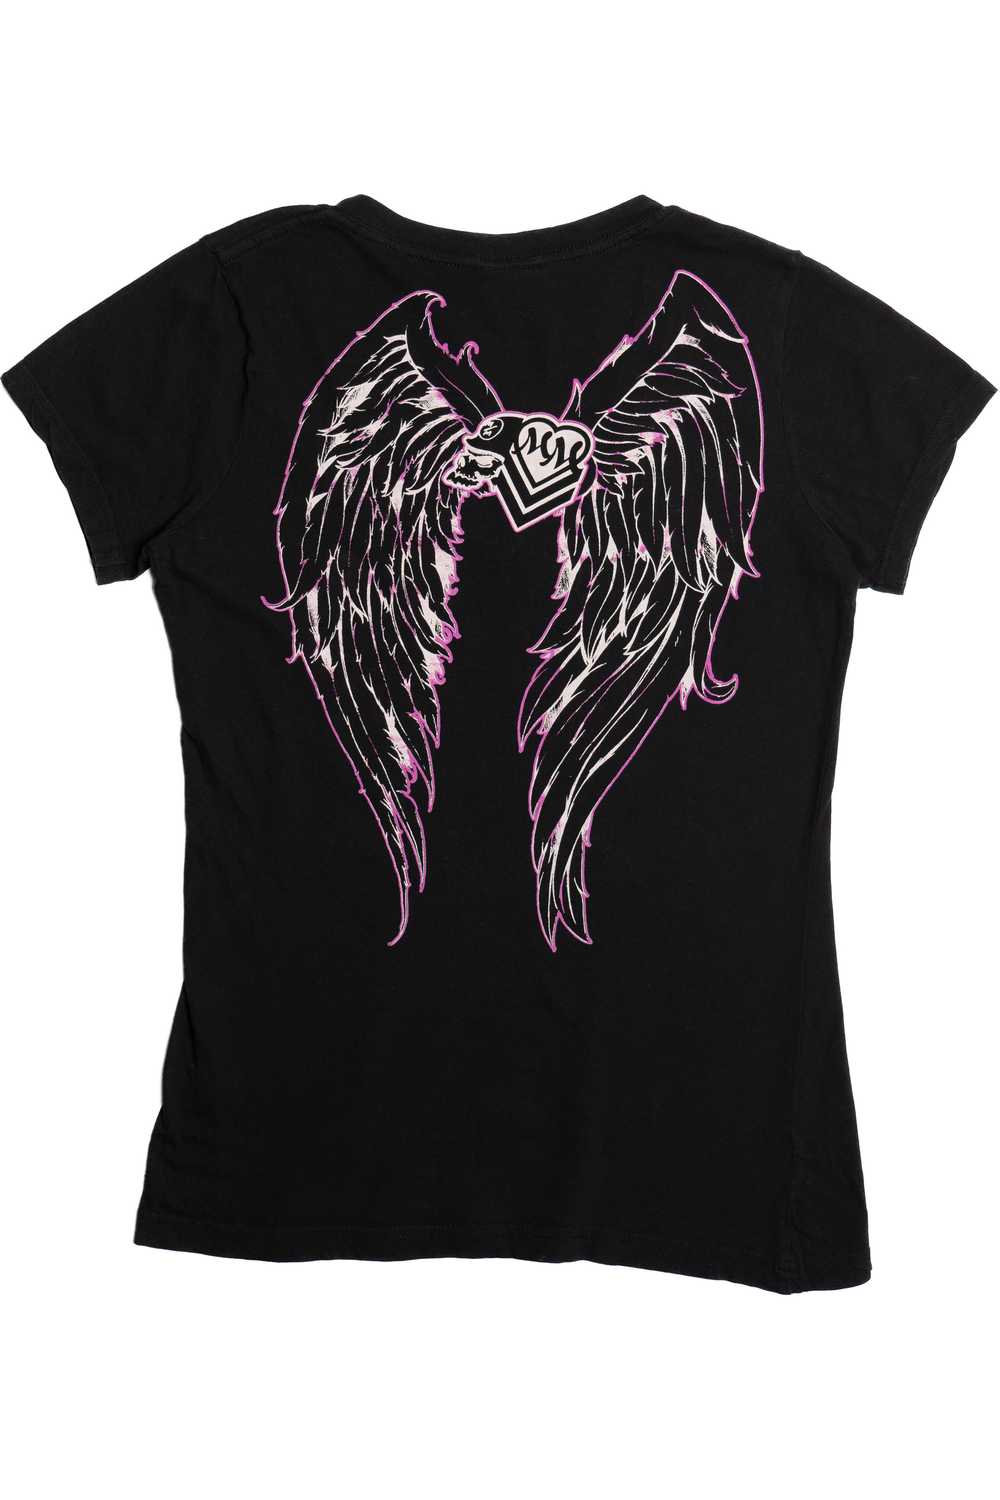 Vintage Metal Mulisha Angel Wings V-Neck T-Shirt - image 2